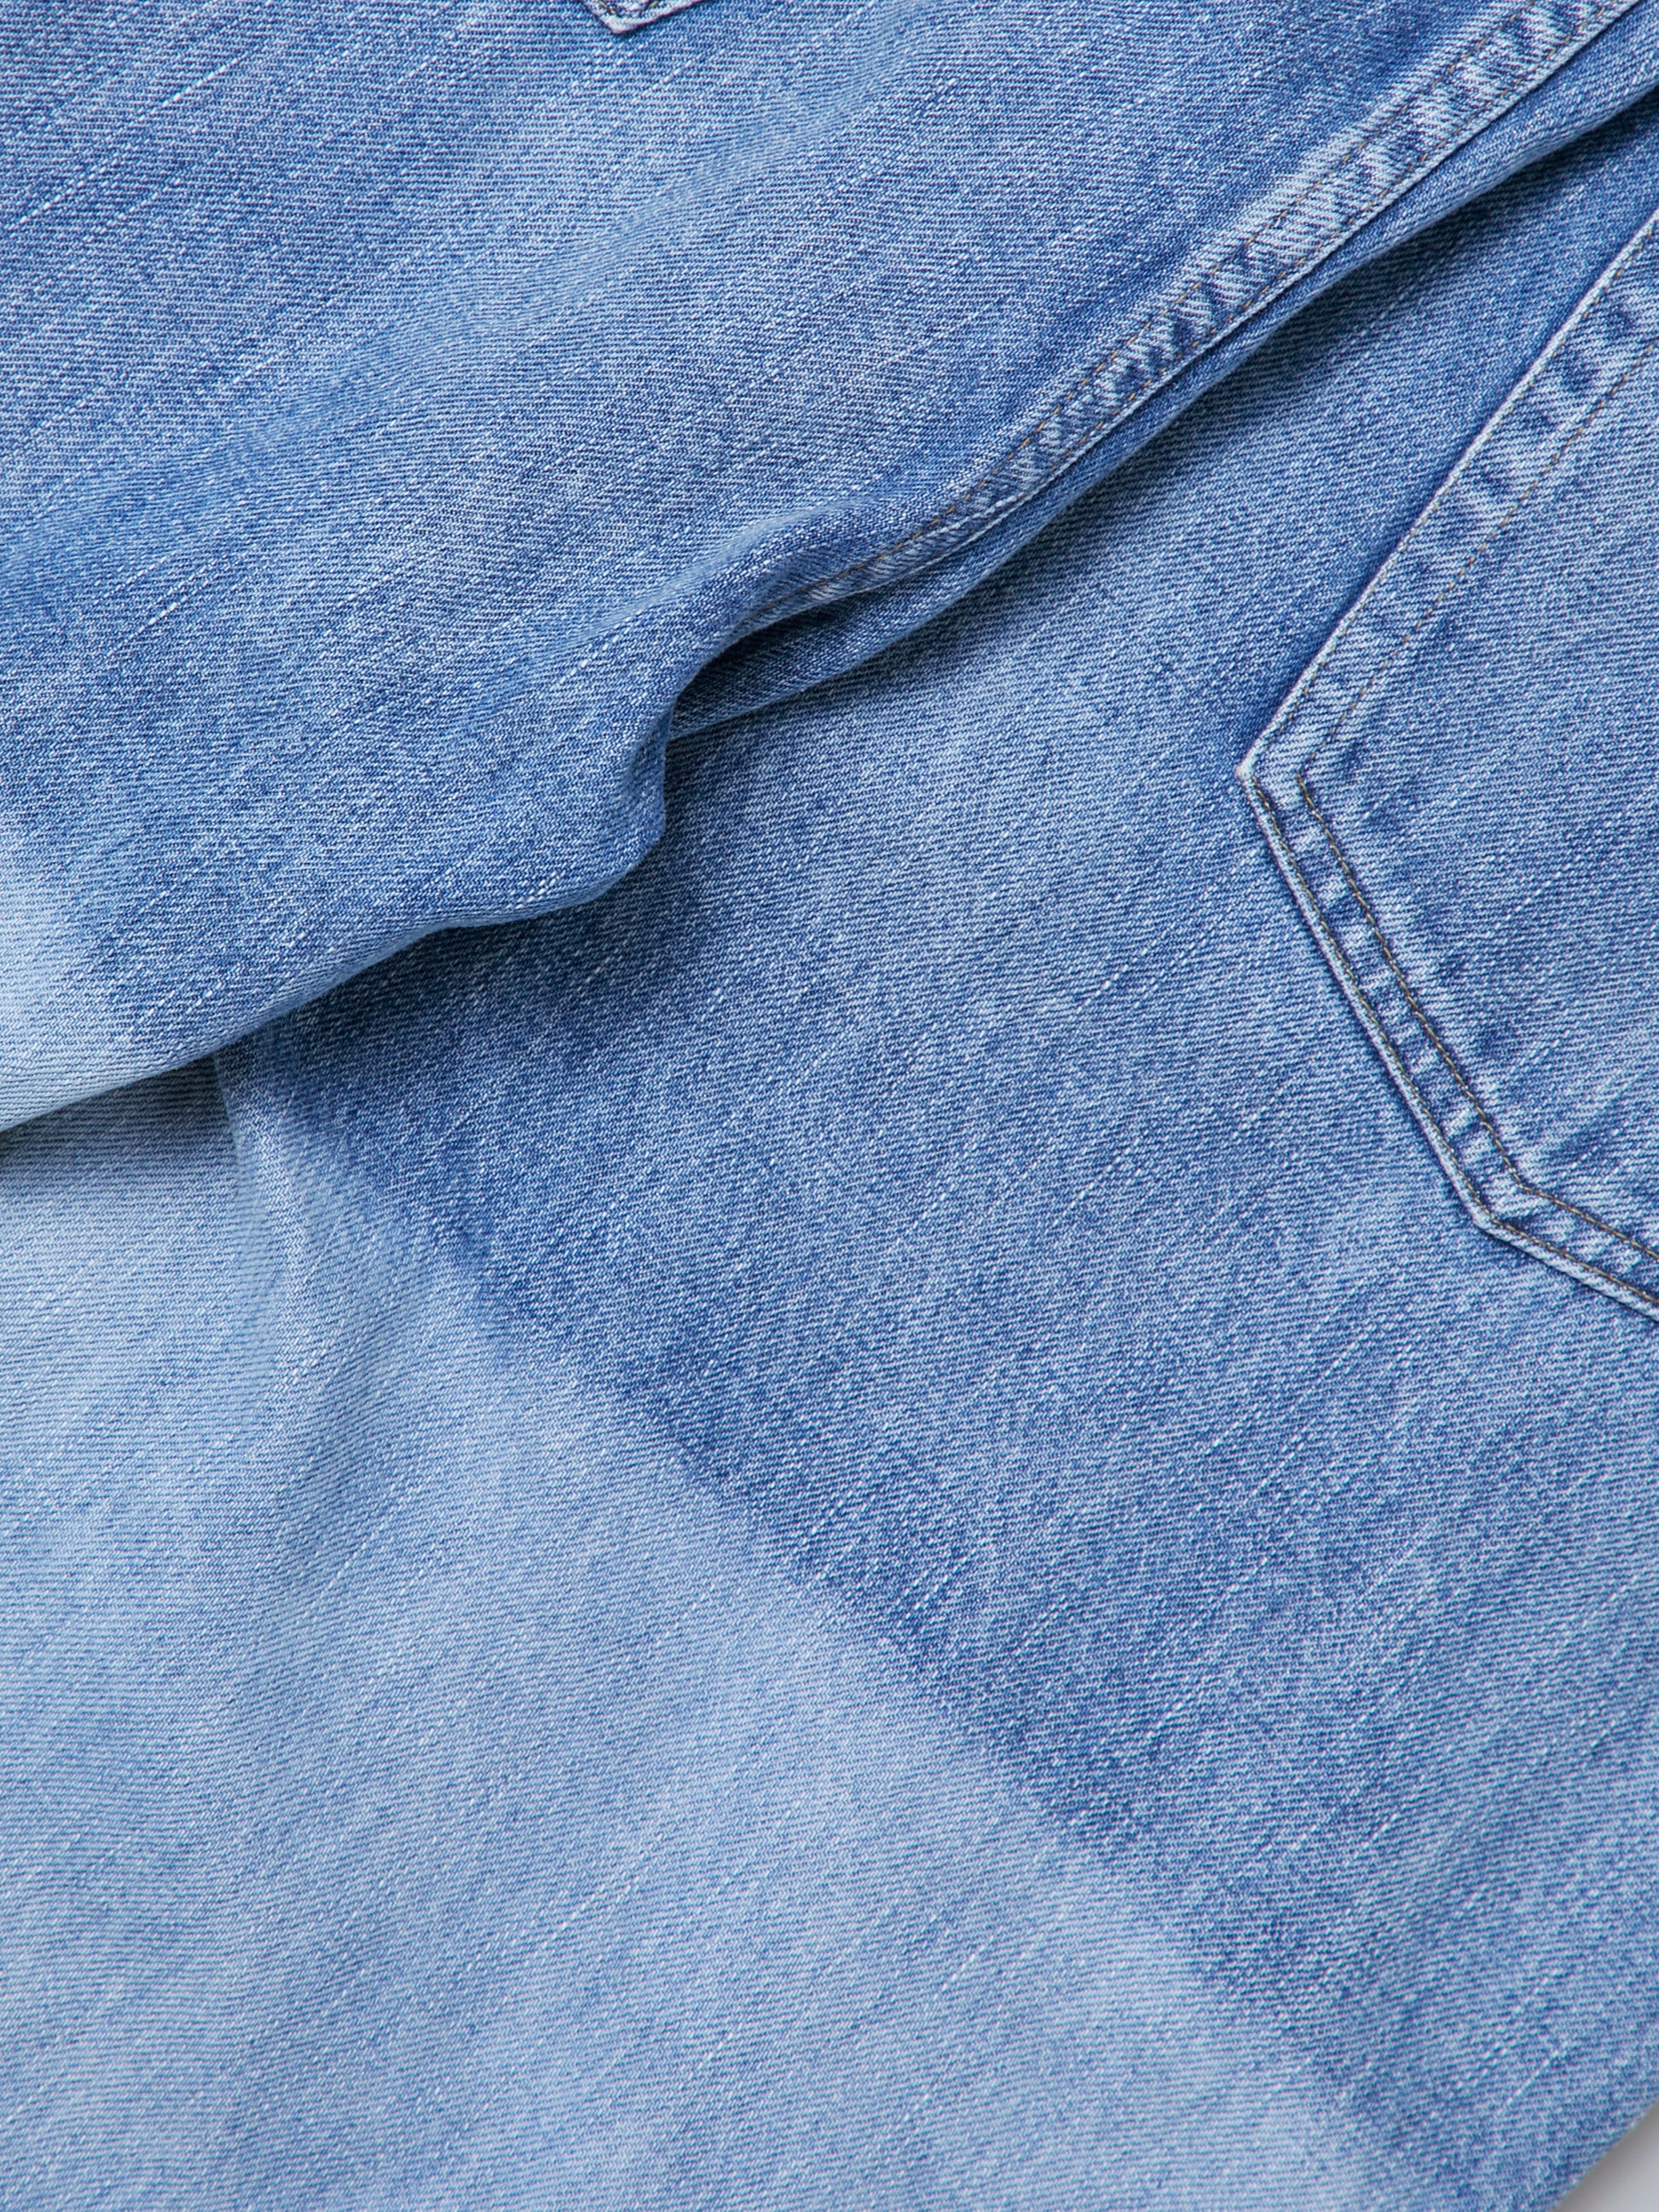 Buy Unused Denim Jeans (Indigo) Online at UNION LOS ANGELES